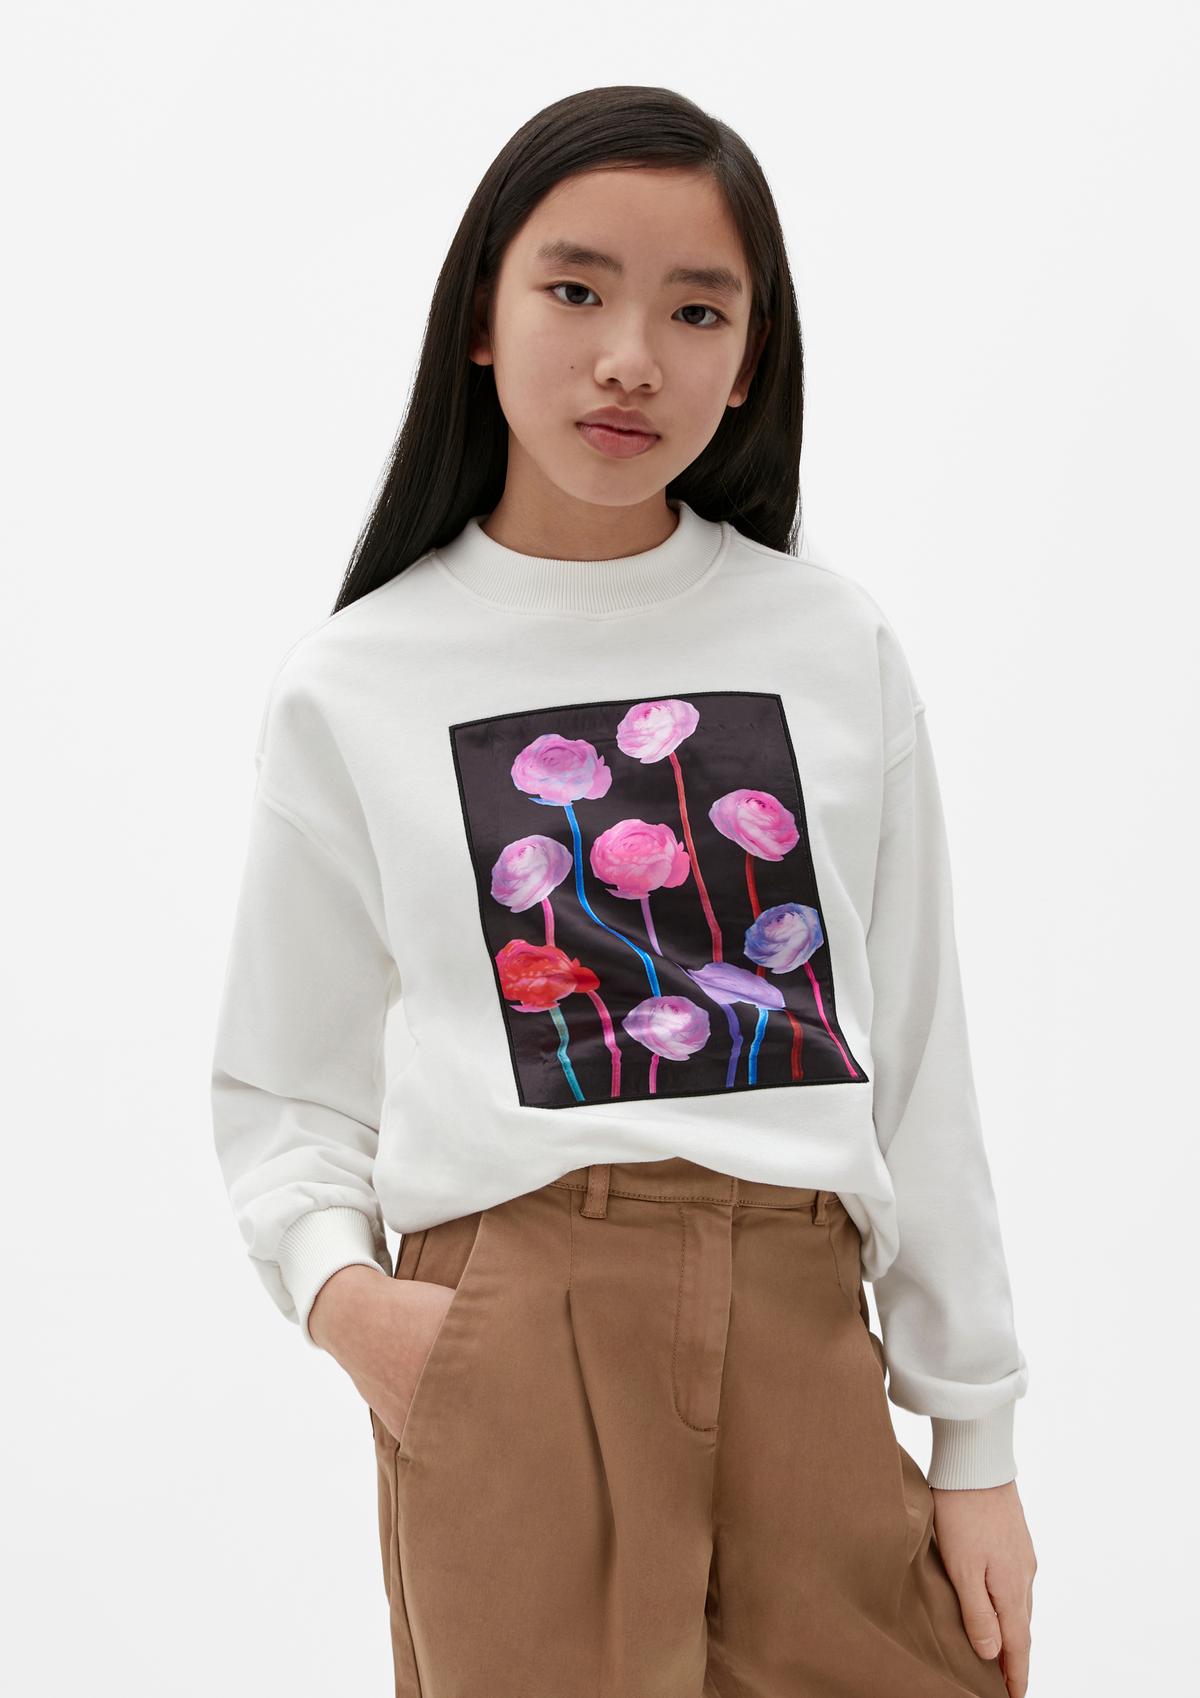 Sweatshirt with a shiny appliqué